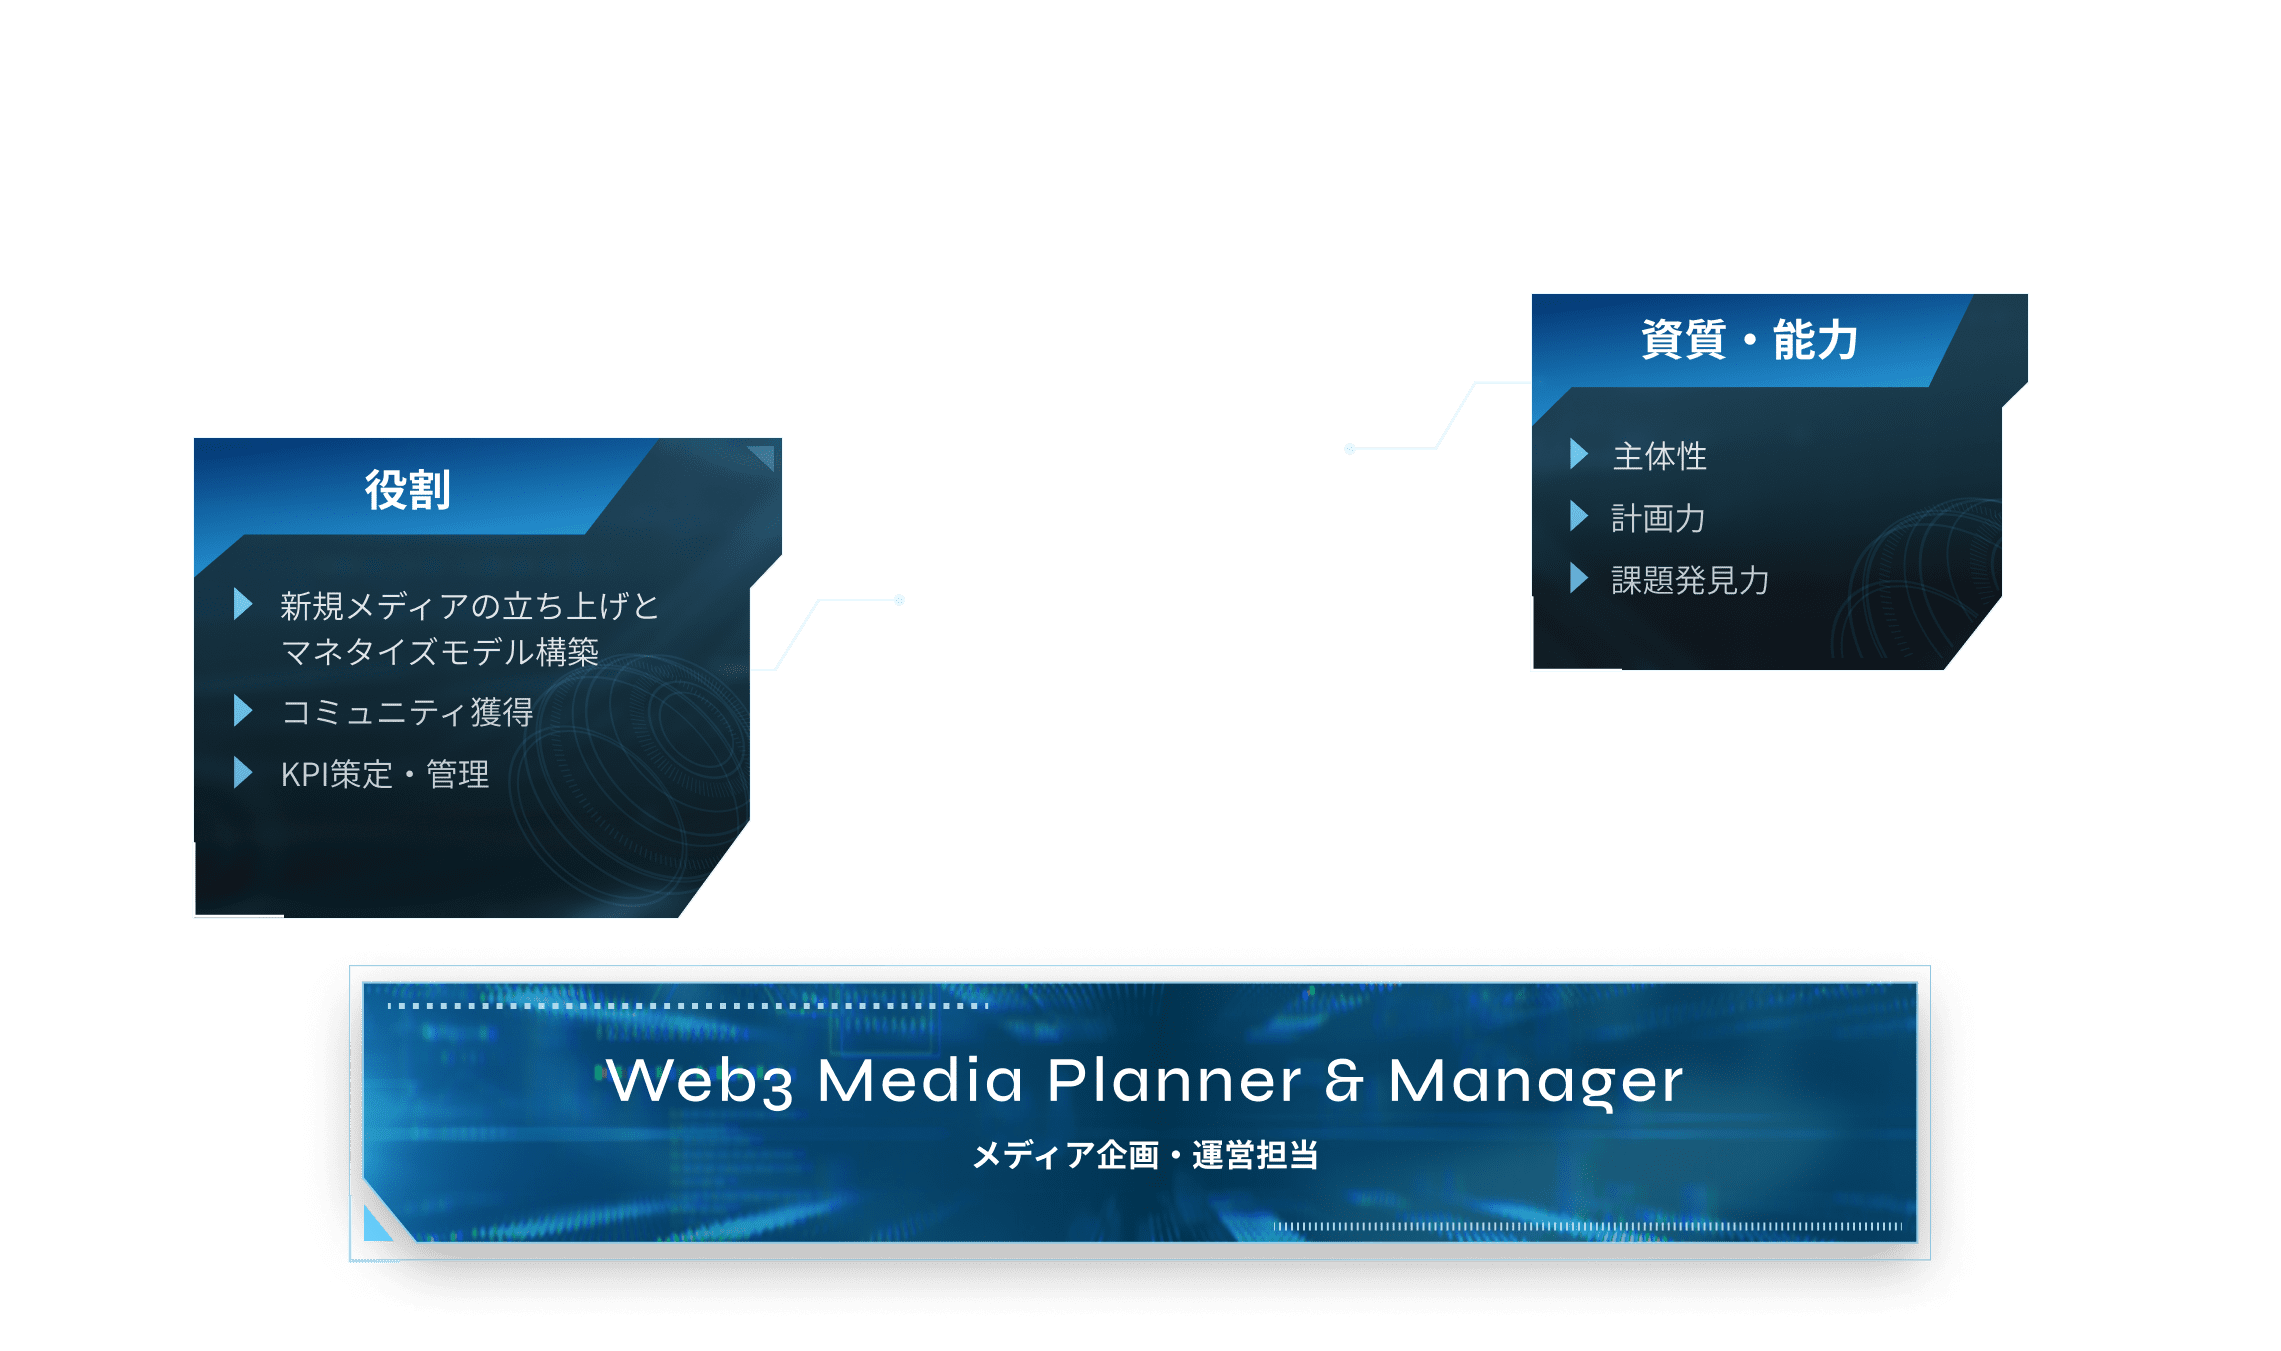 Web3 Media Planner & Manager メディア企画・運営担当